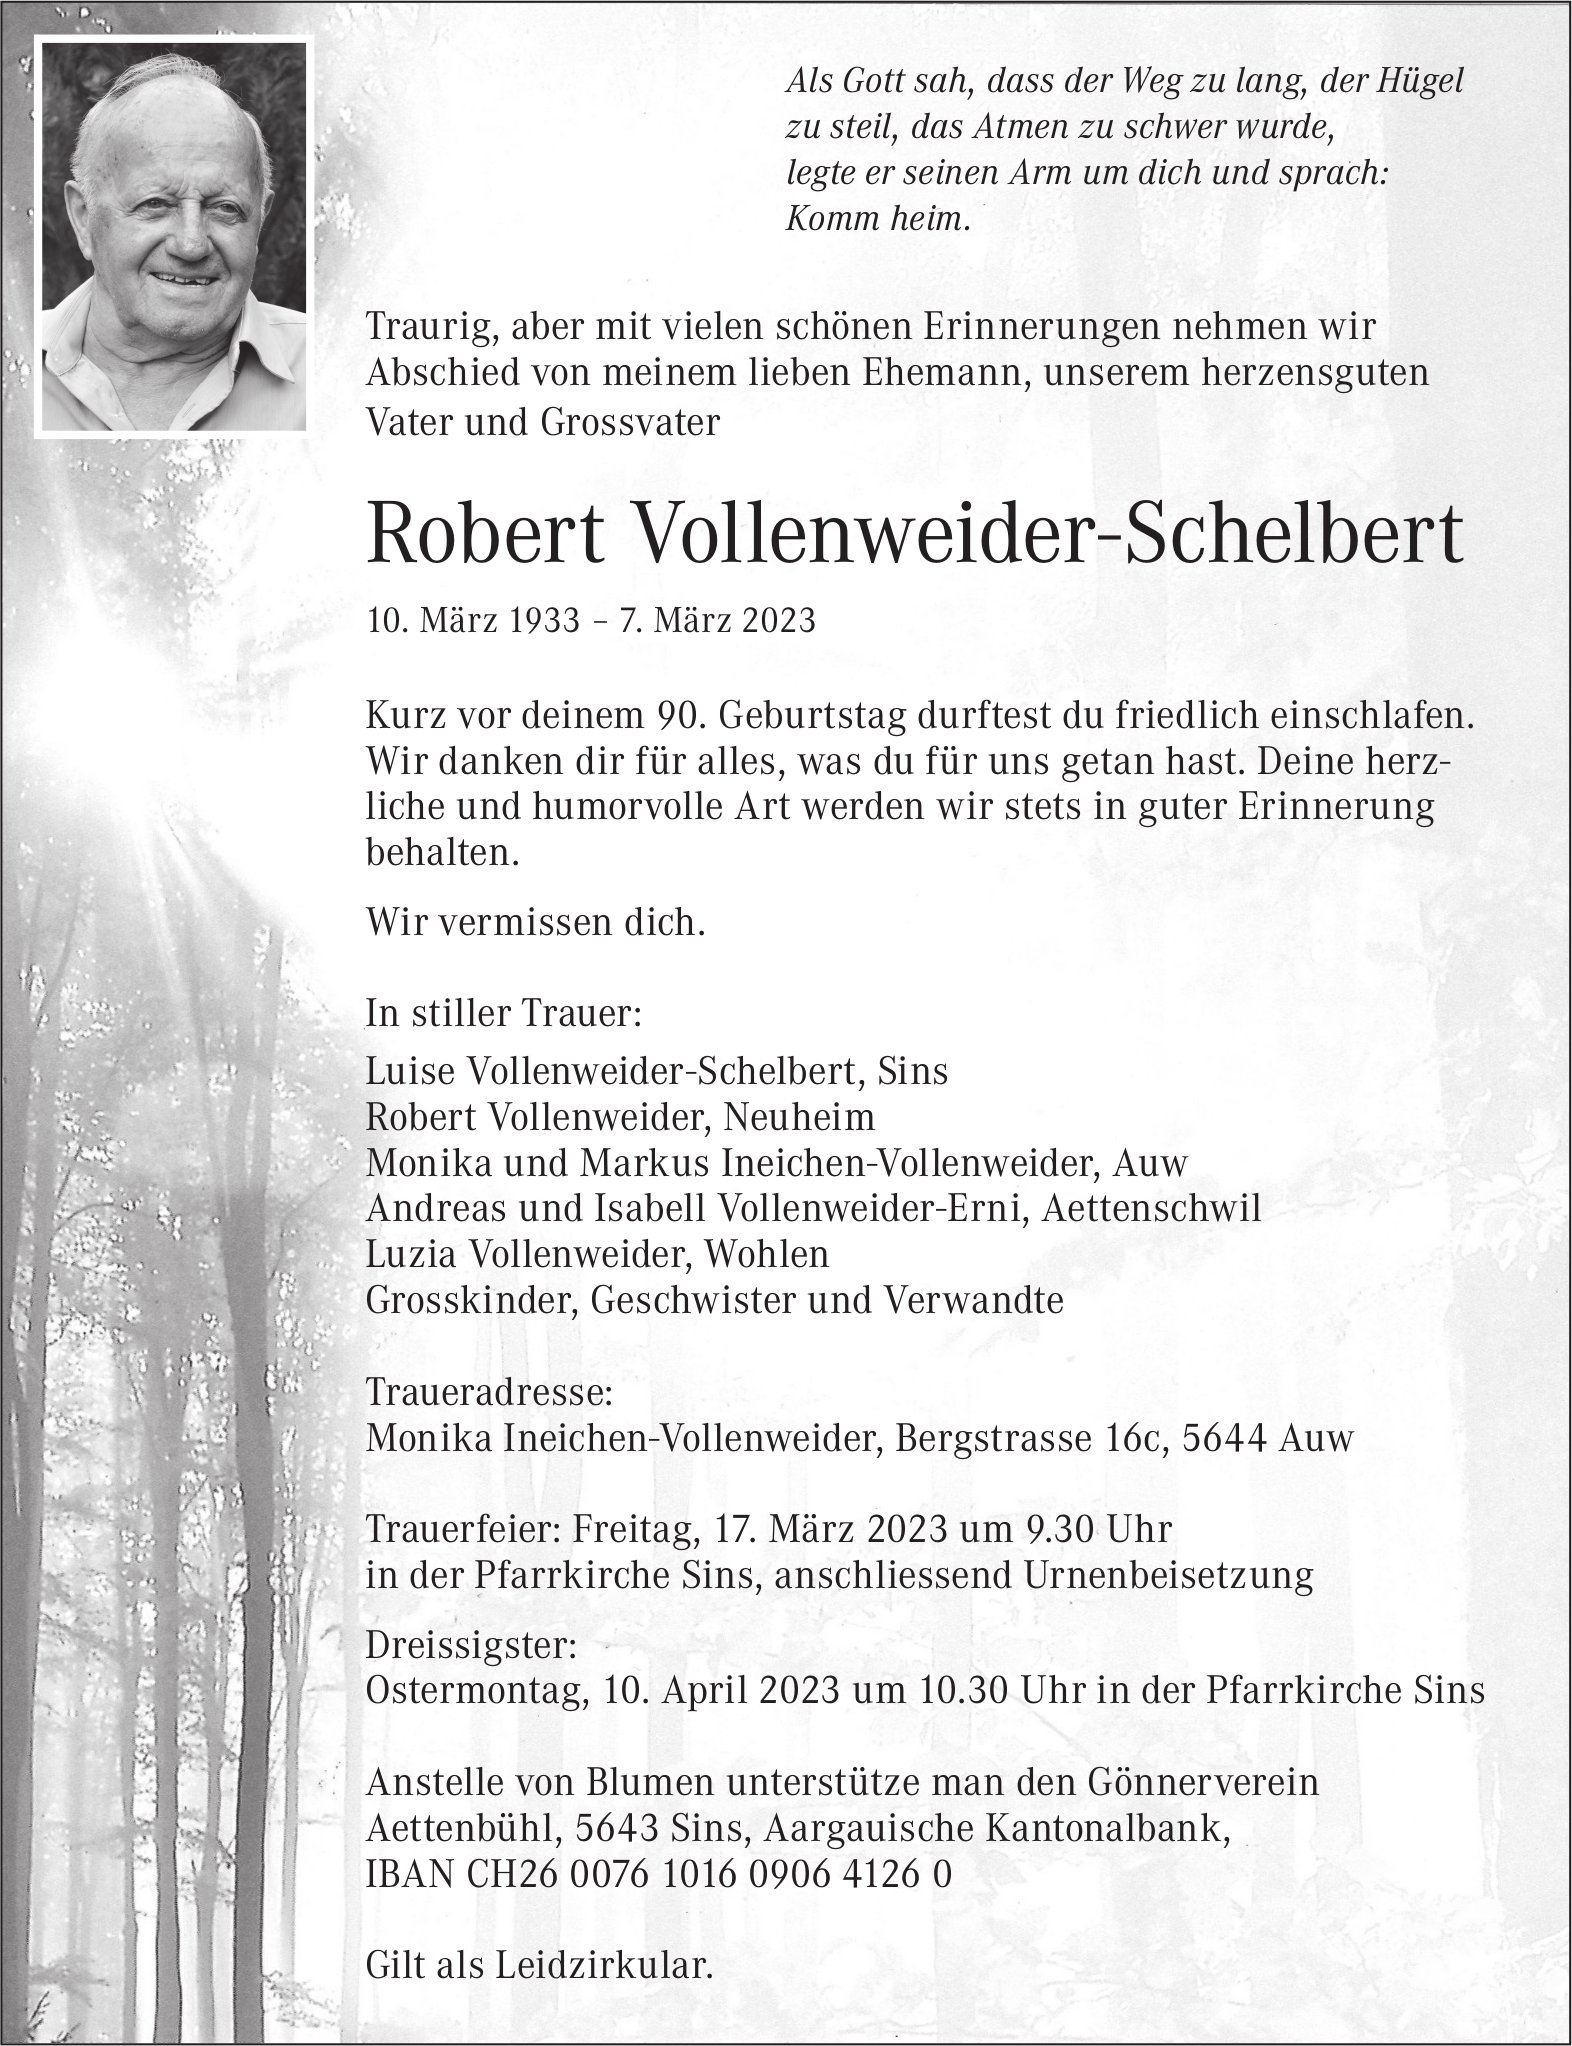 Vollenweider-Schelbert Robert, März 2023 / TA